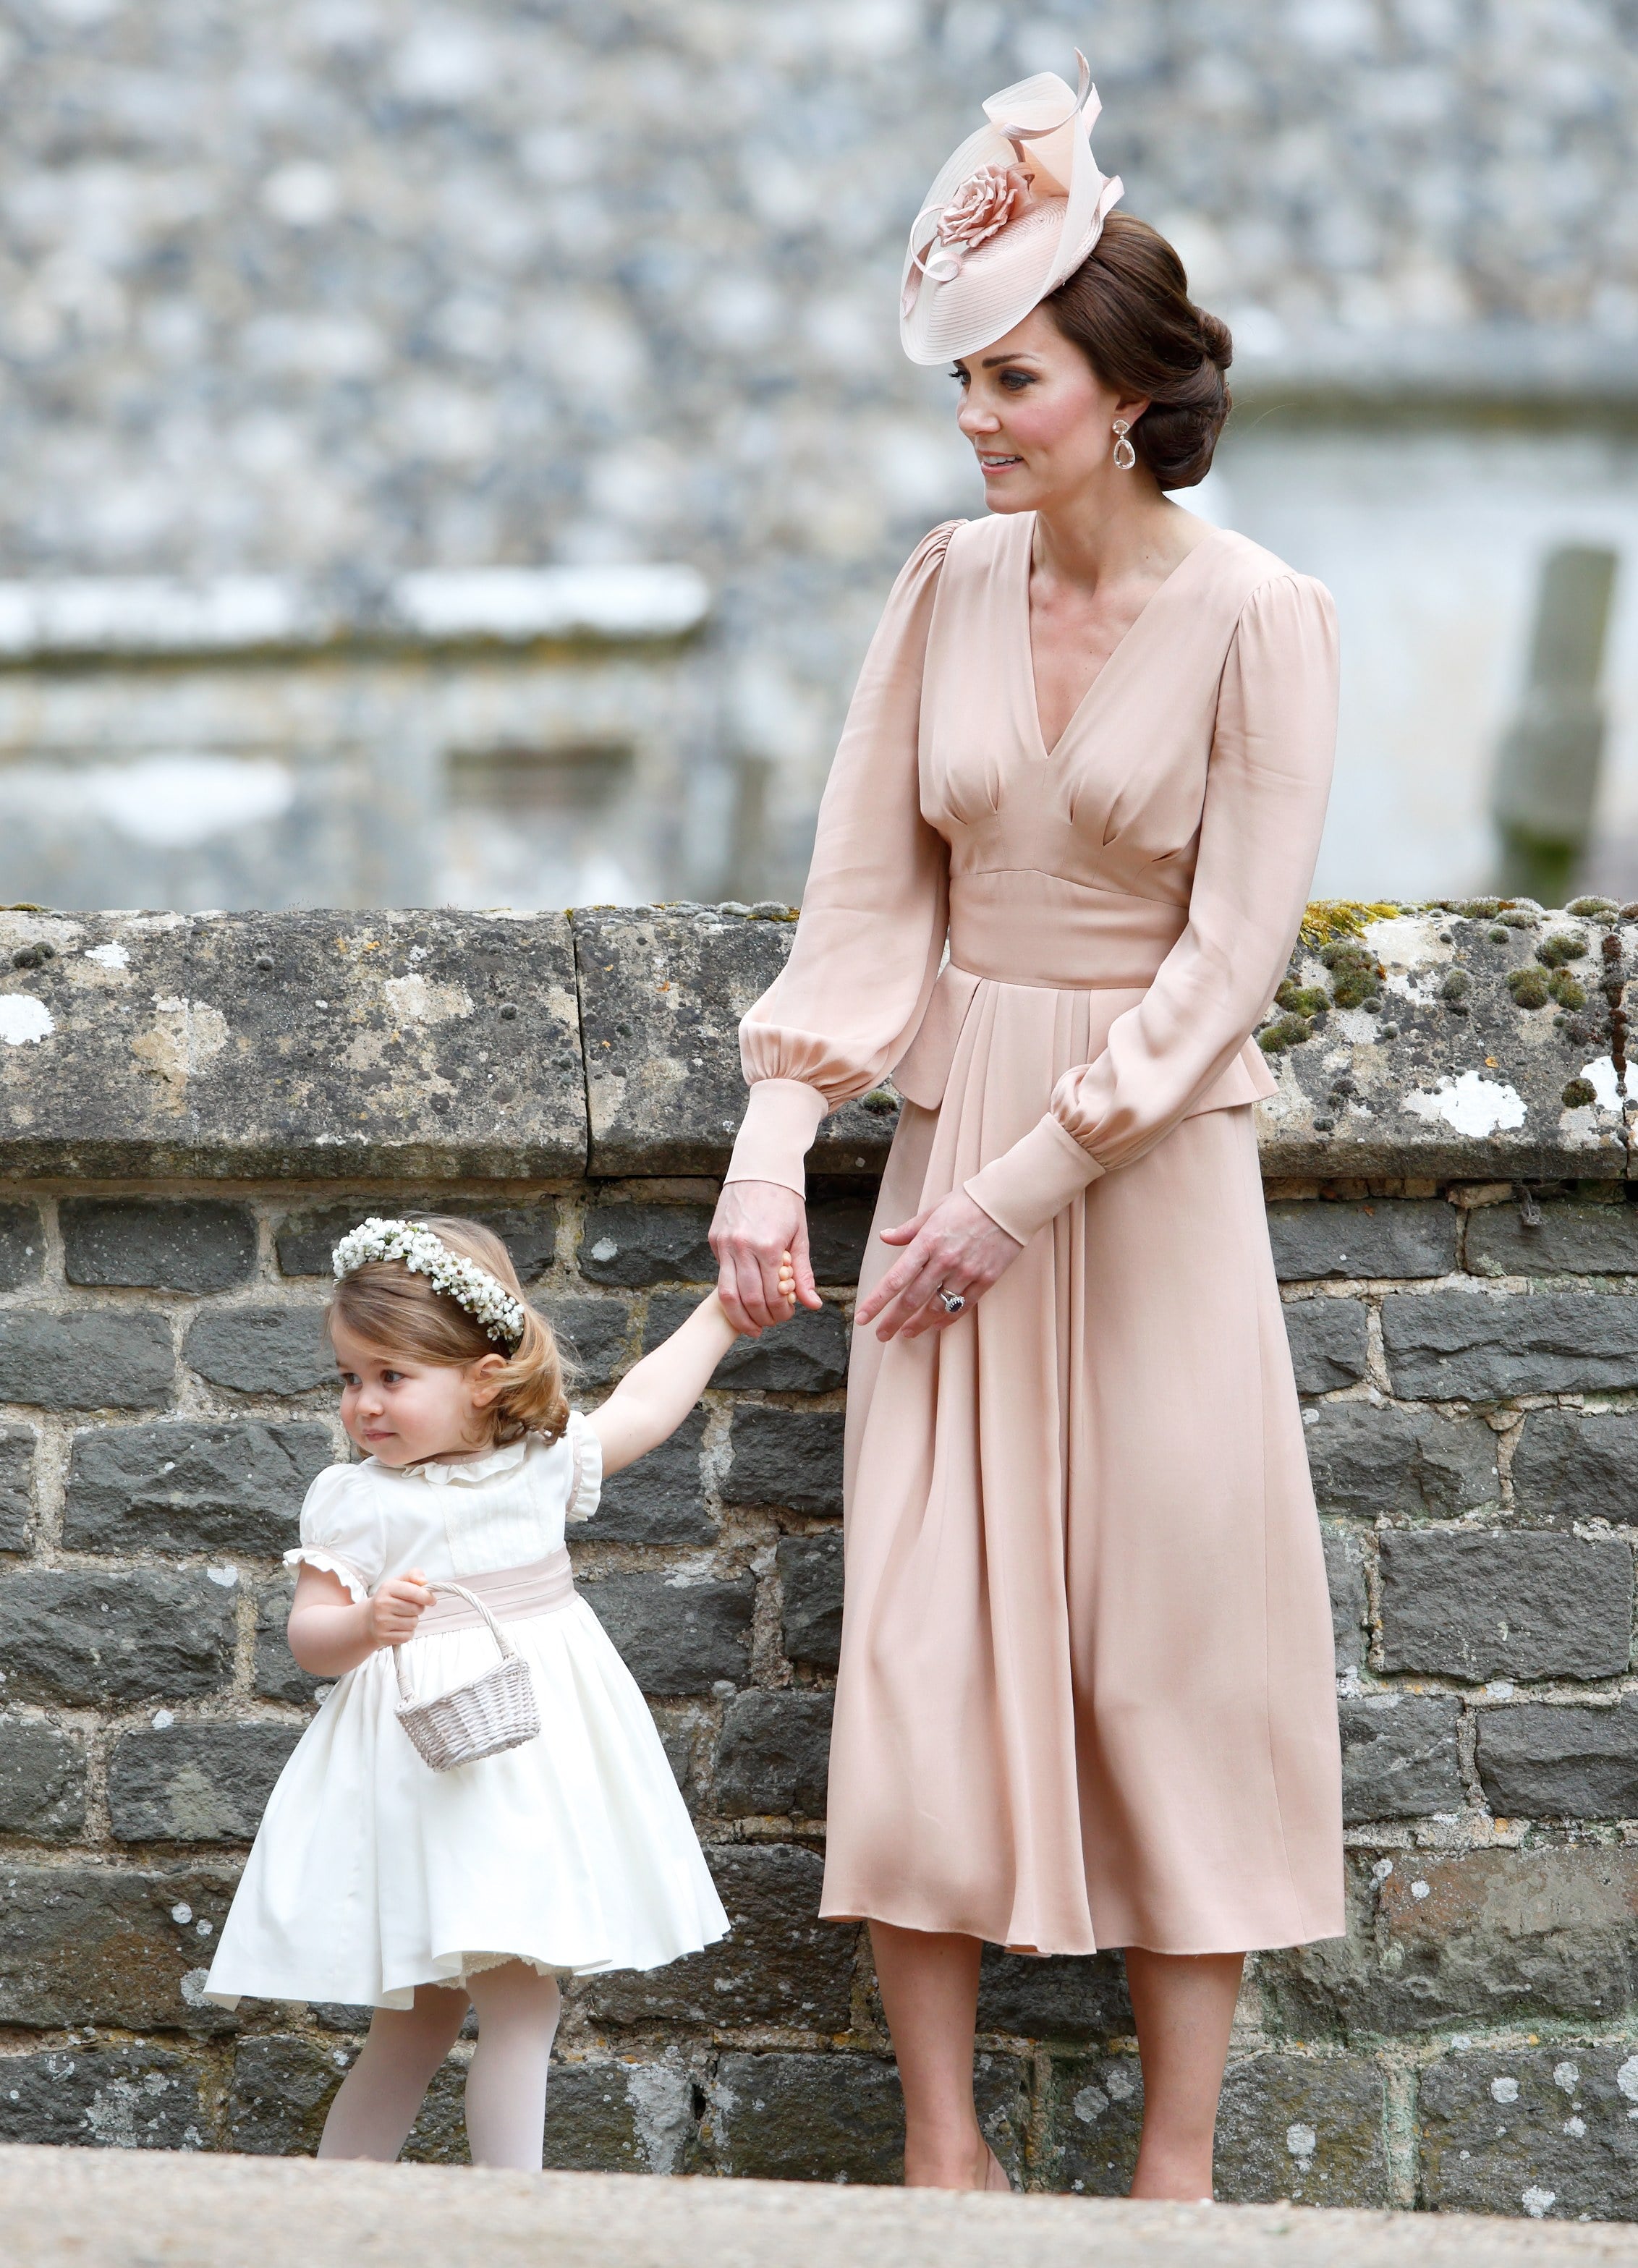 Dresses Like Kate Middleton's at Pippa's Wedding